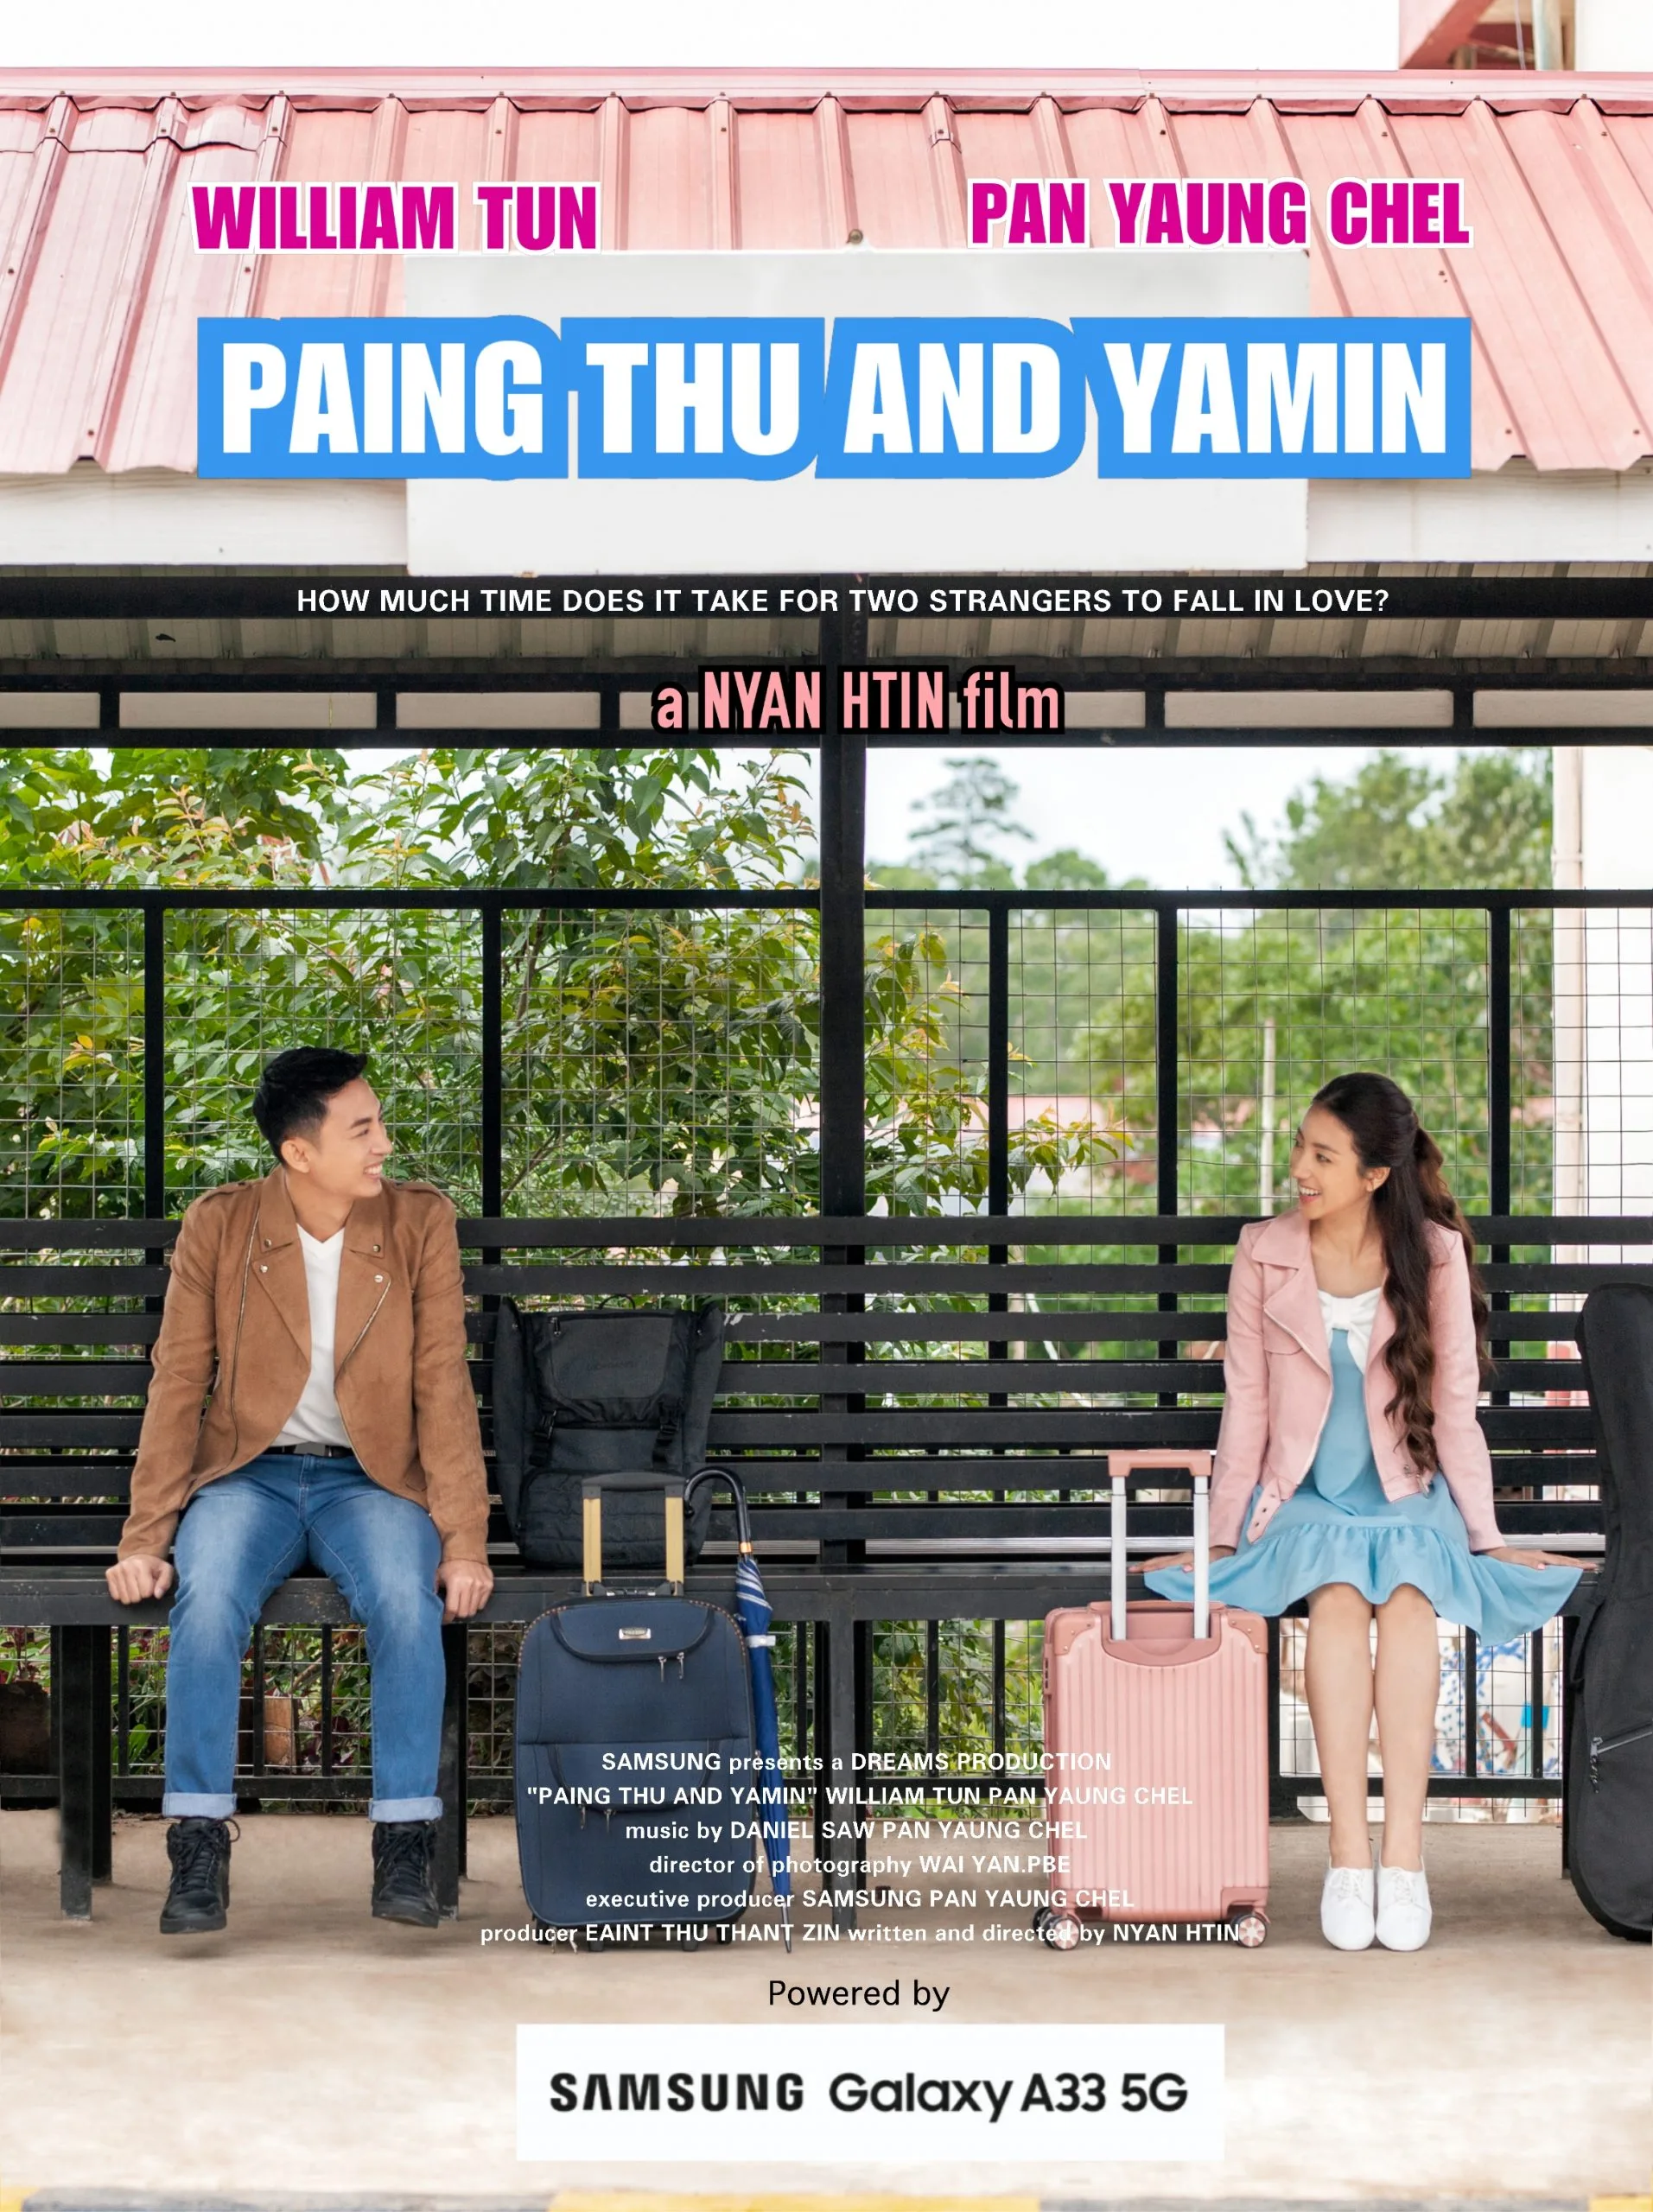 pan yaung chel and paing thu movies